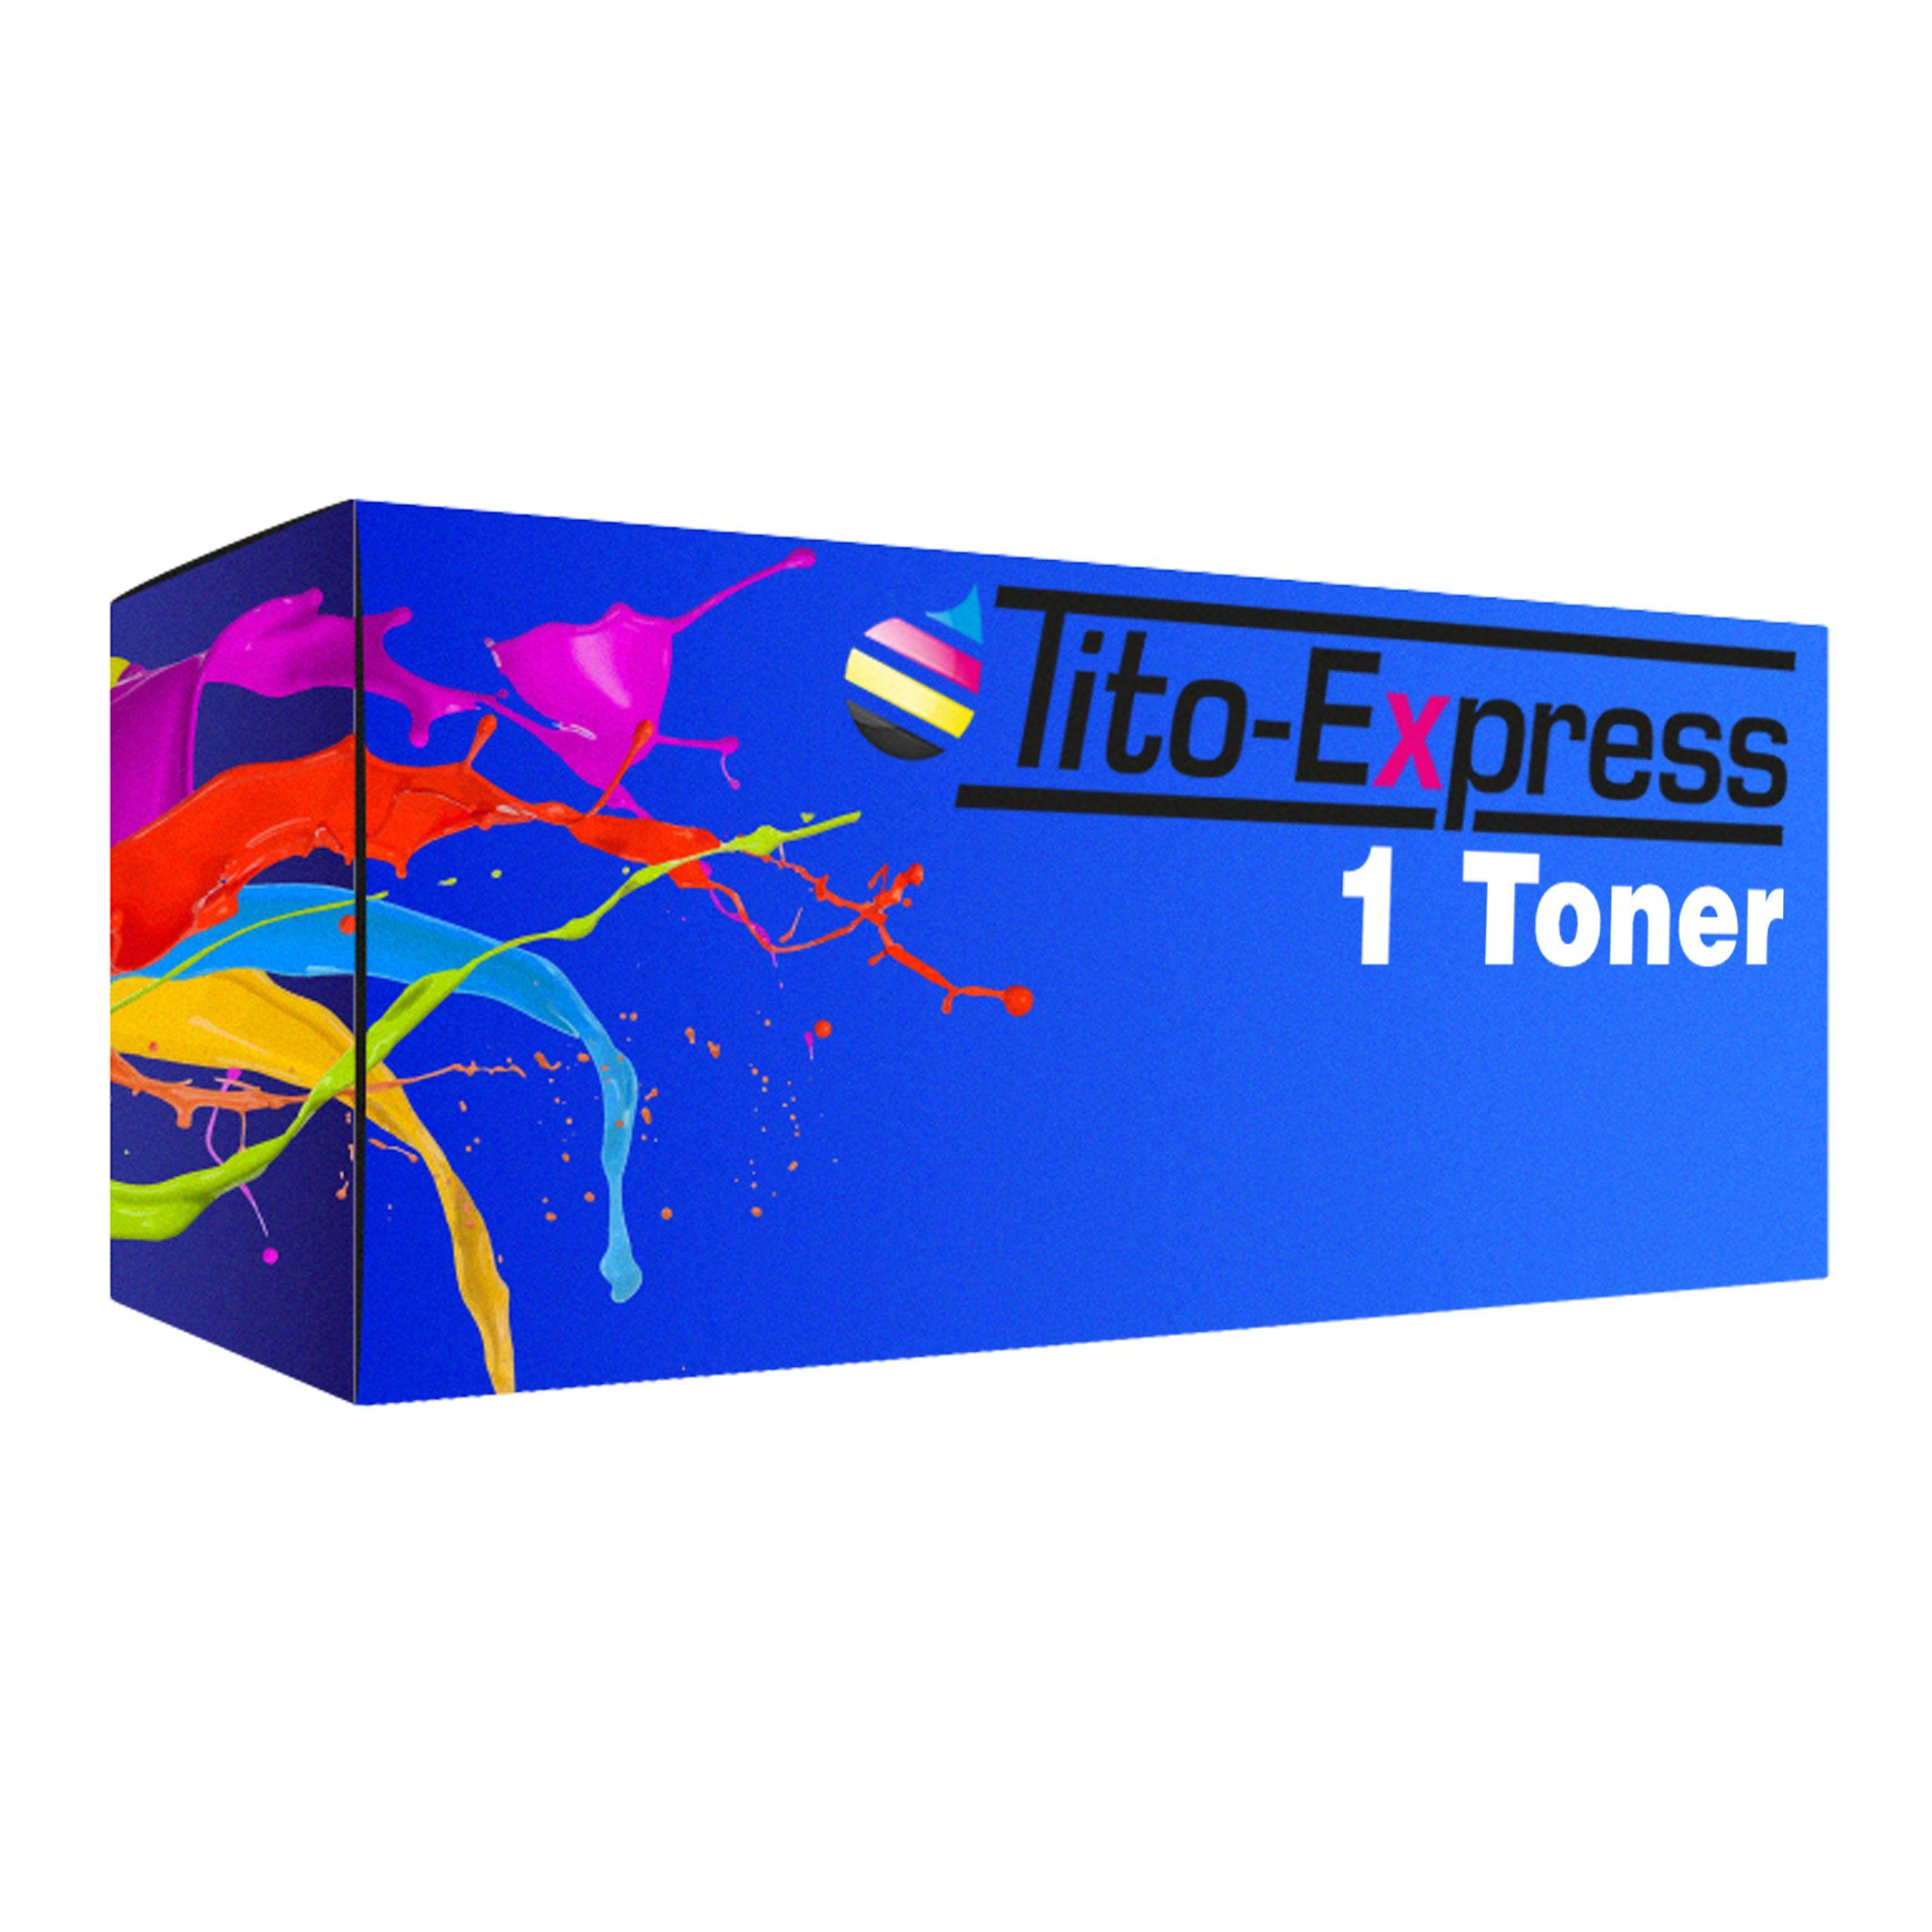 Tito-Express Tonerpatrone ersetzt Brother TN-7600 Brother TN 7600 BrotherTN7600, für HL 5050 HL 5050 LT HL 5070 N MFC 8420 MFC 8820 D MFC 8820 DN